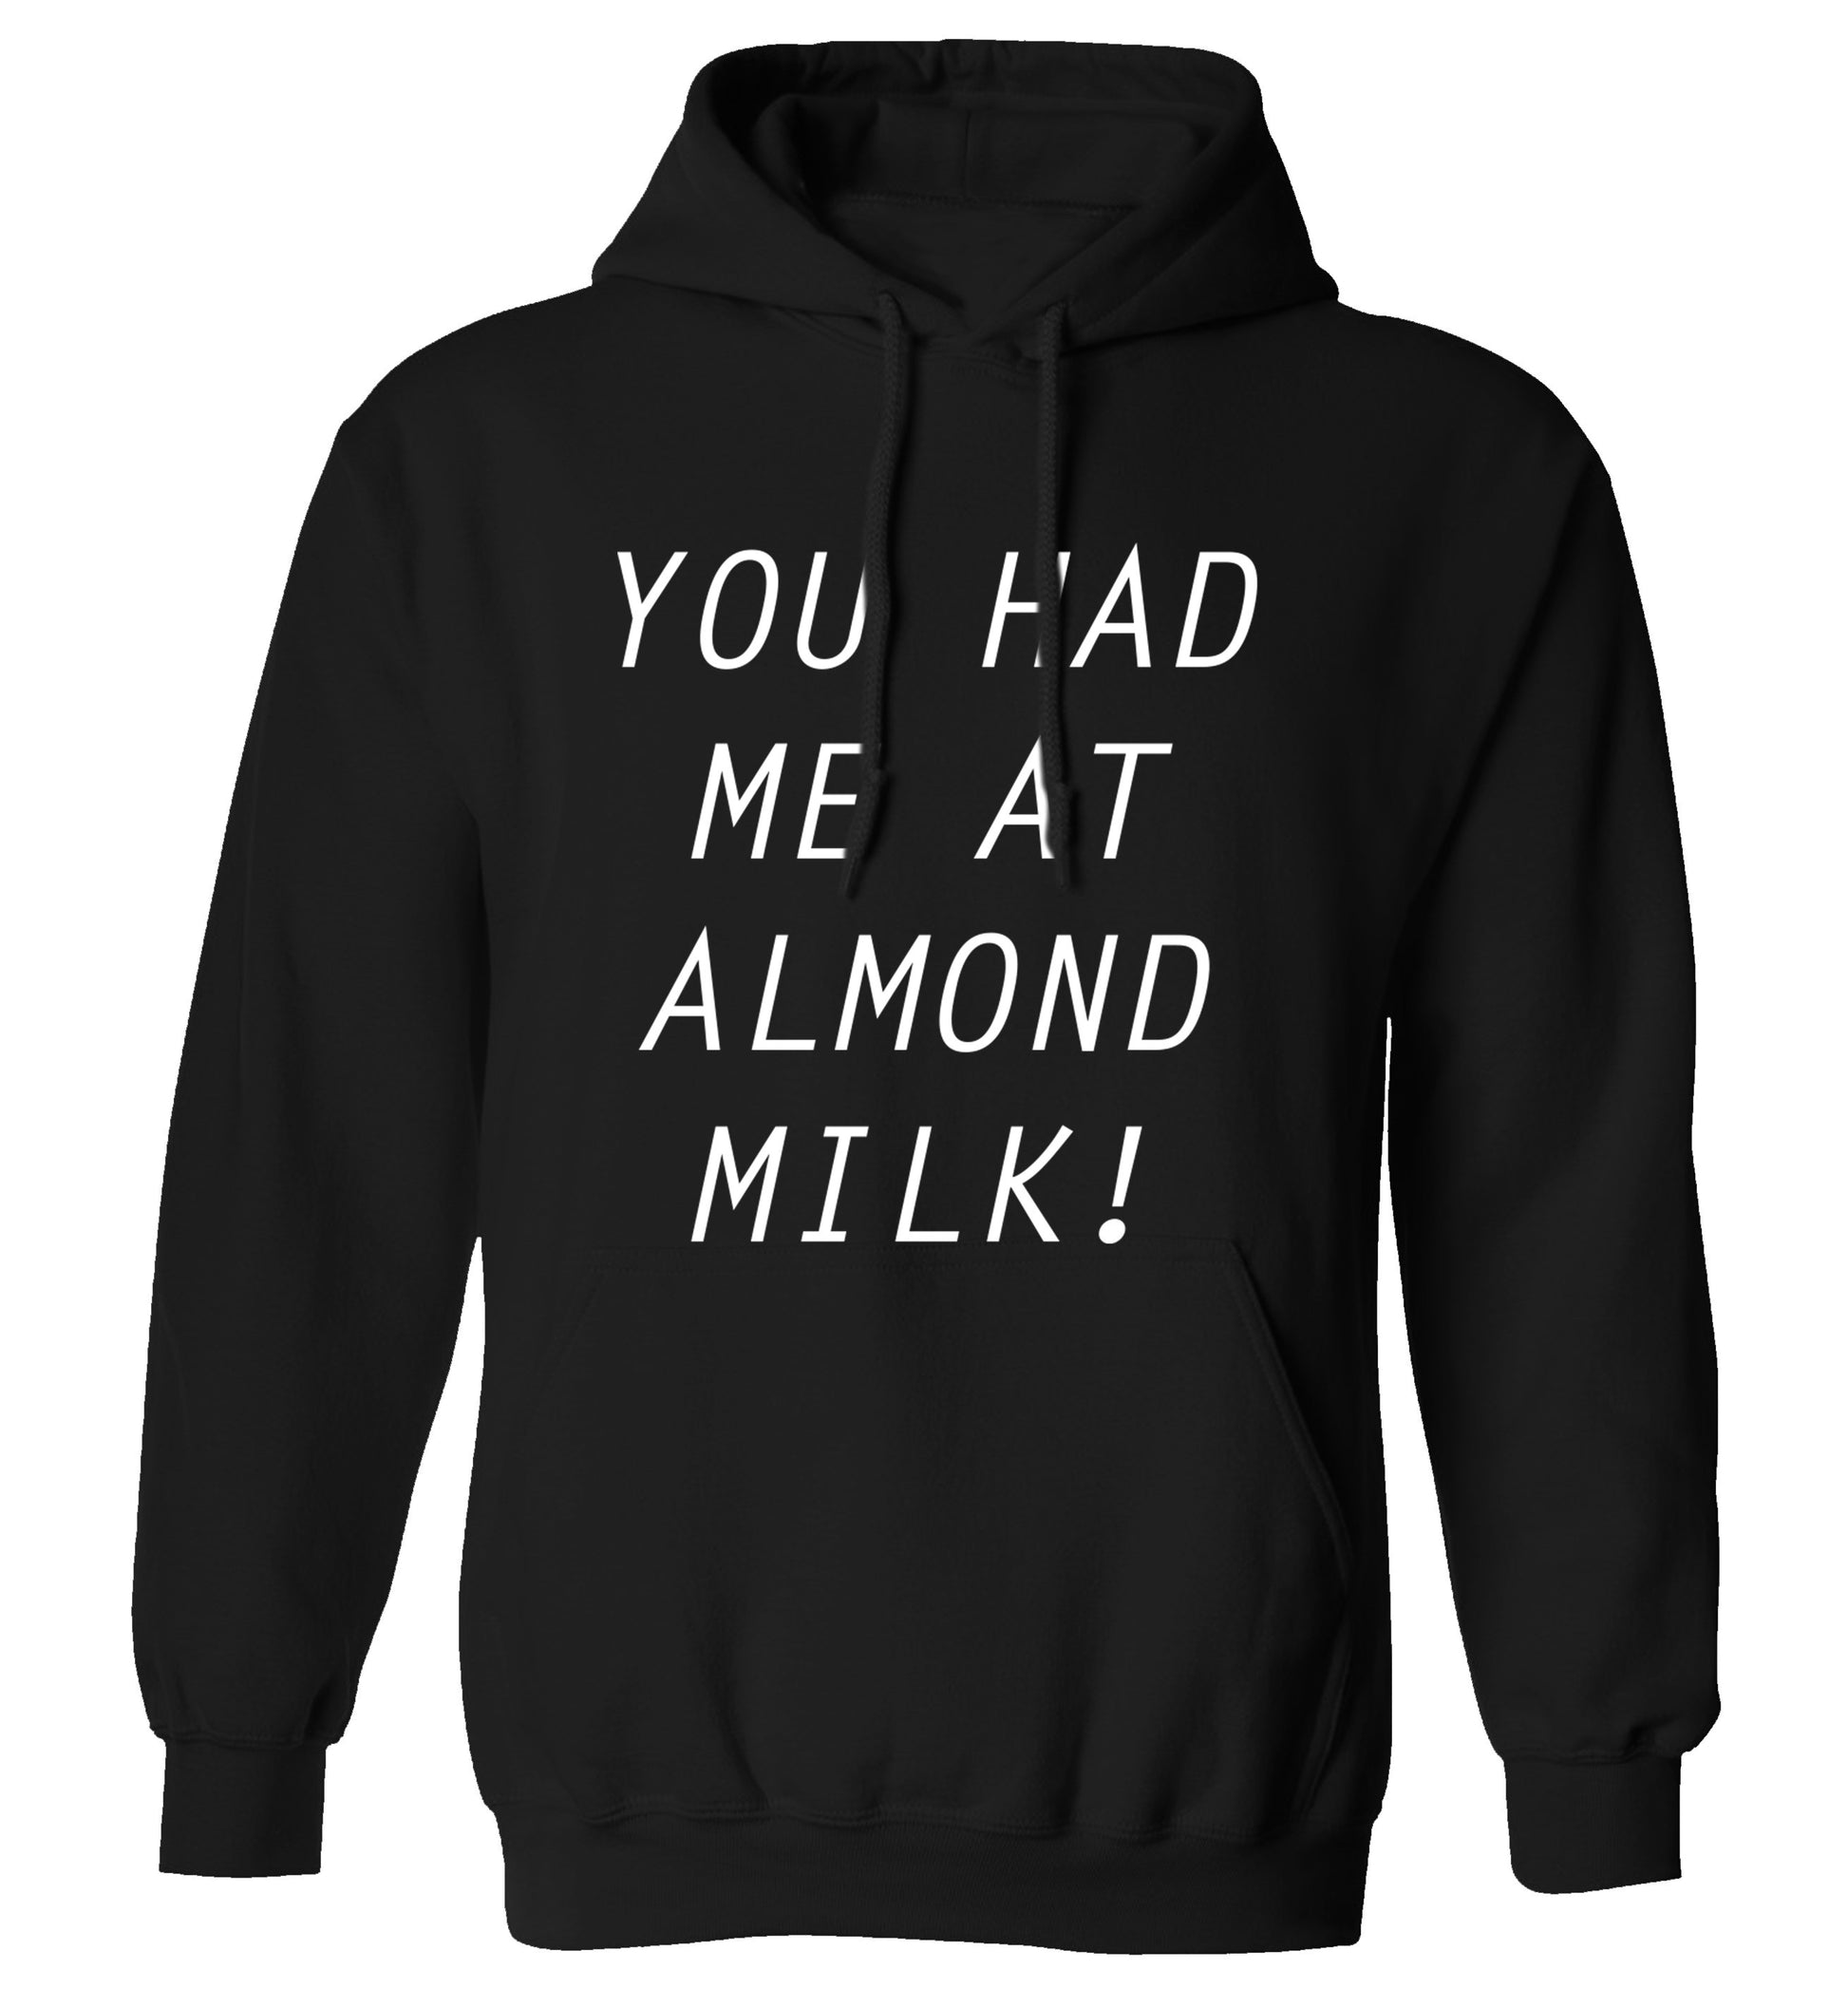 You had me at almond milk adults unisex black hoodie 2XL